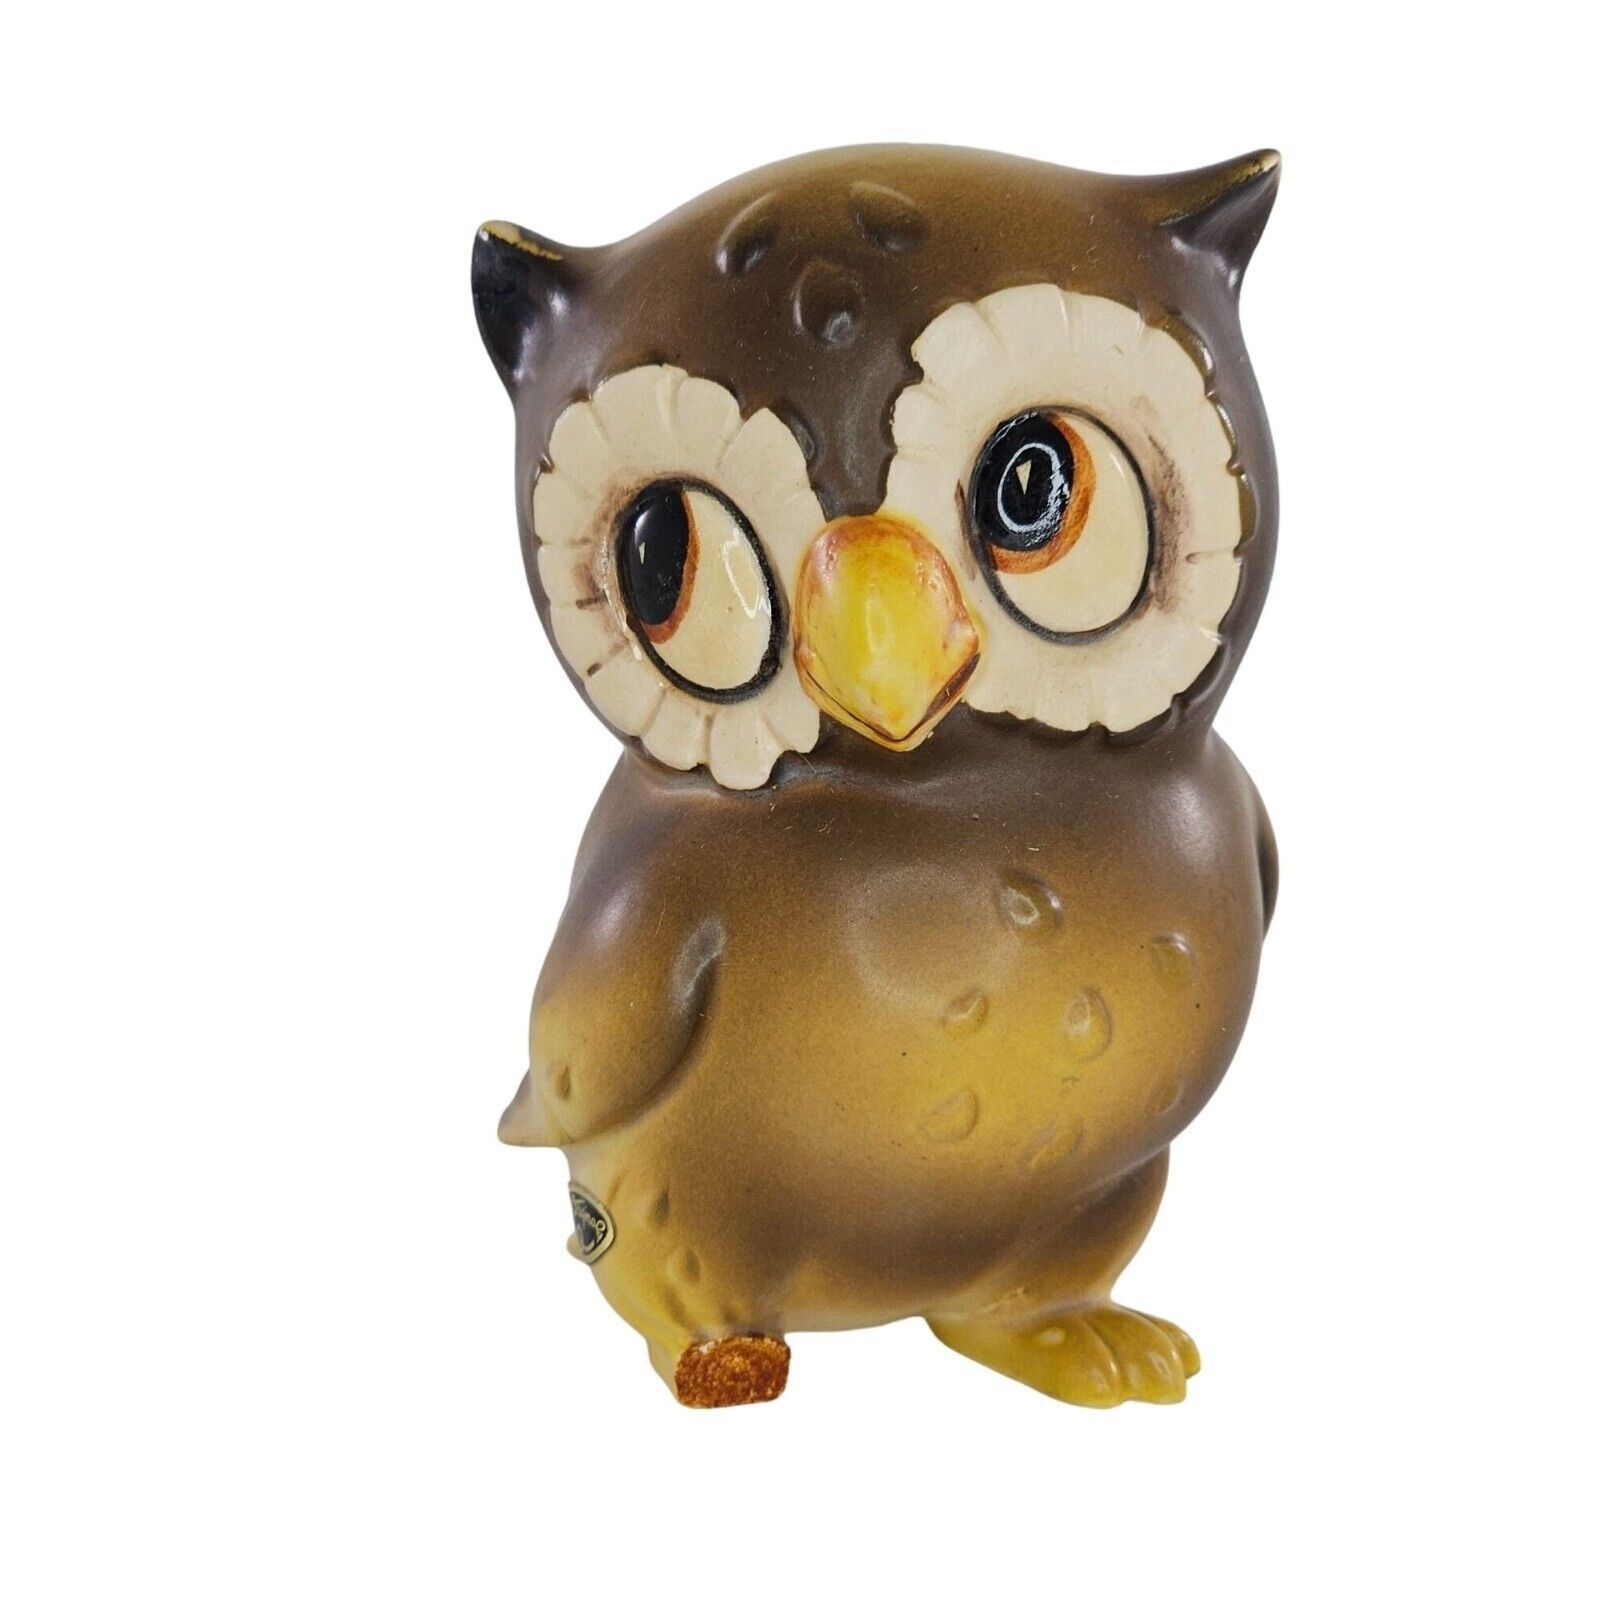 Vintage Josef Originals Owl Figurine Big Eyes Kitsch 4" Tall *FLAW* - $9.99